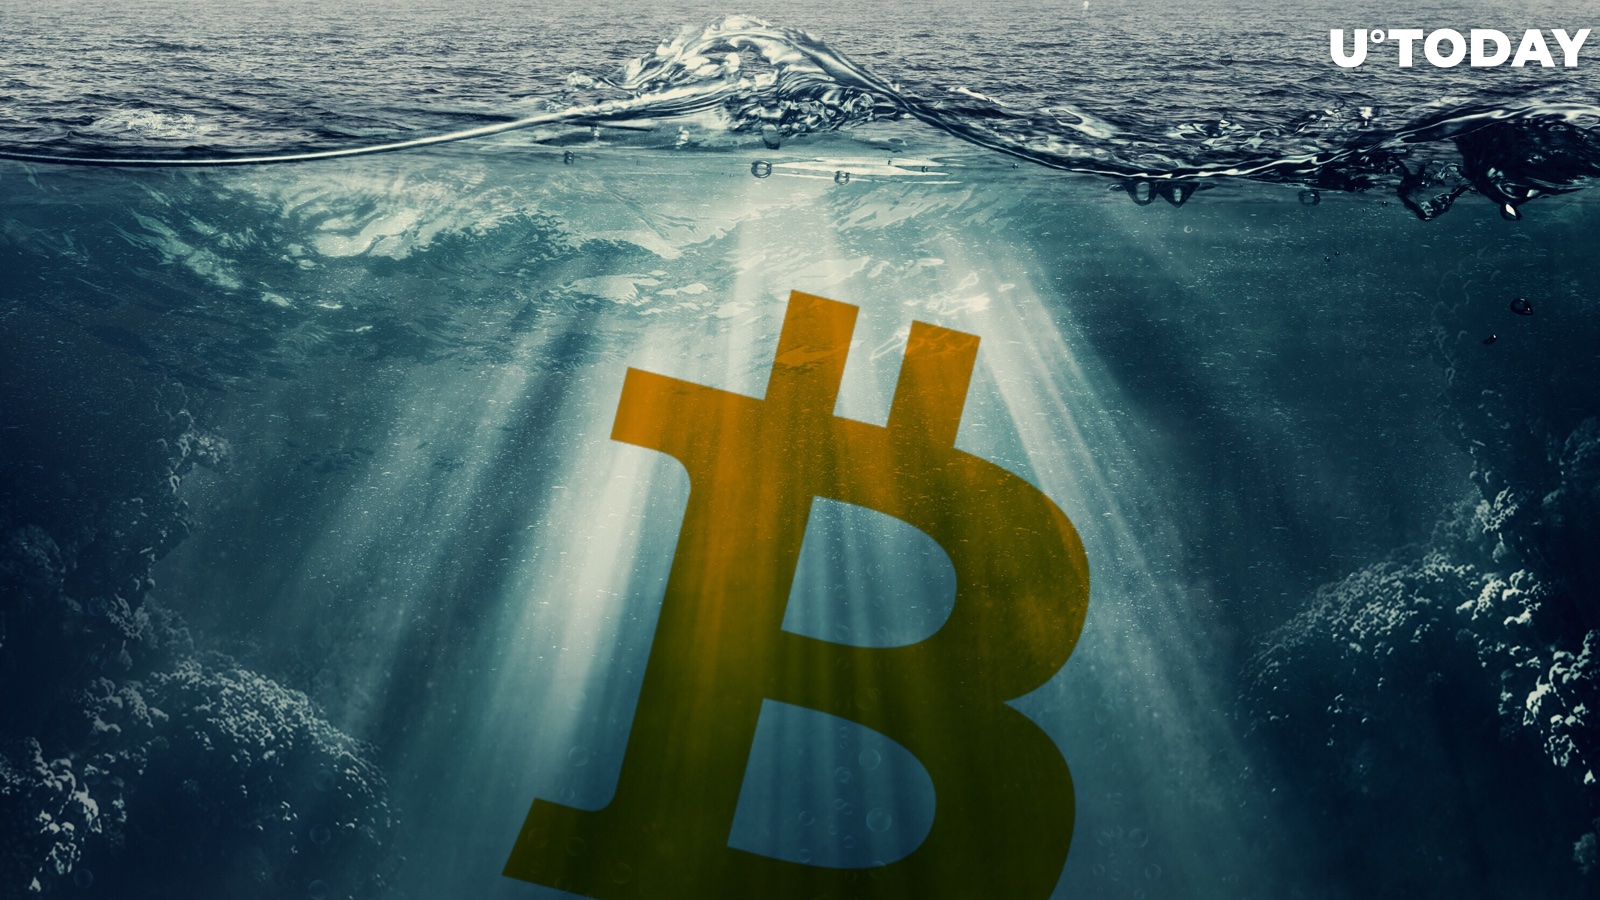 Bitcoin Price Has Bottomed in Q1 2019: Delphi Digital Report